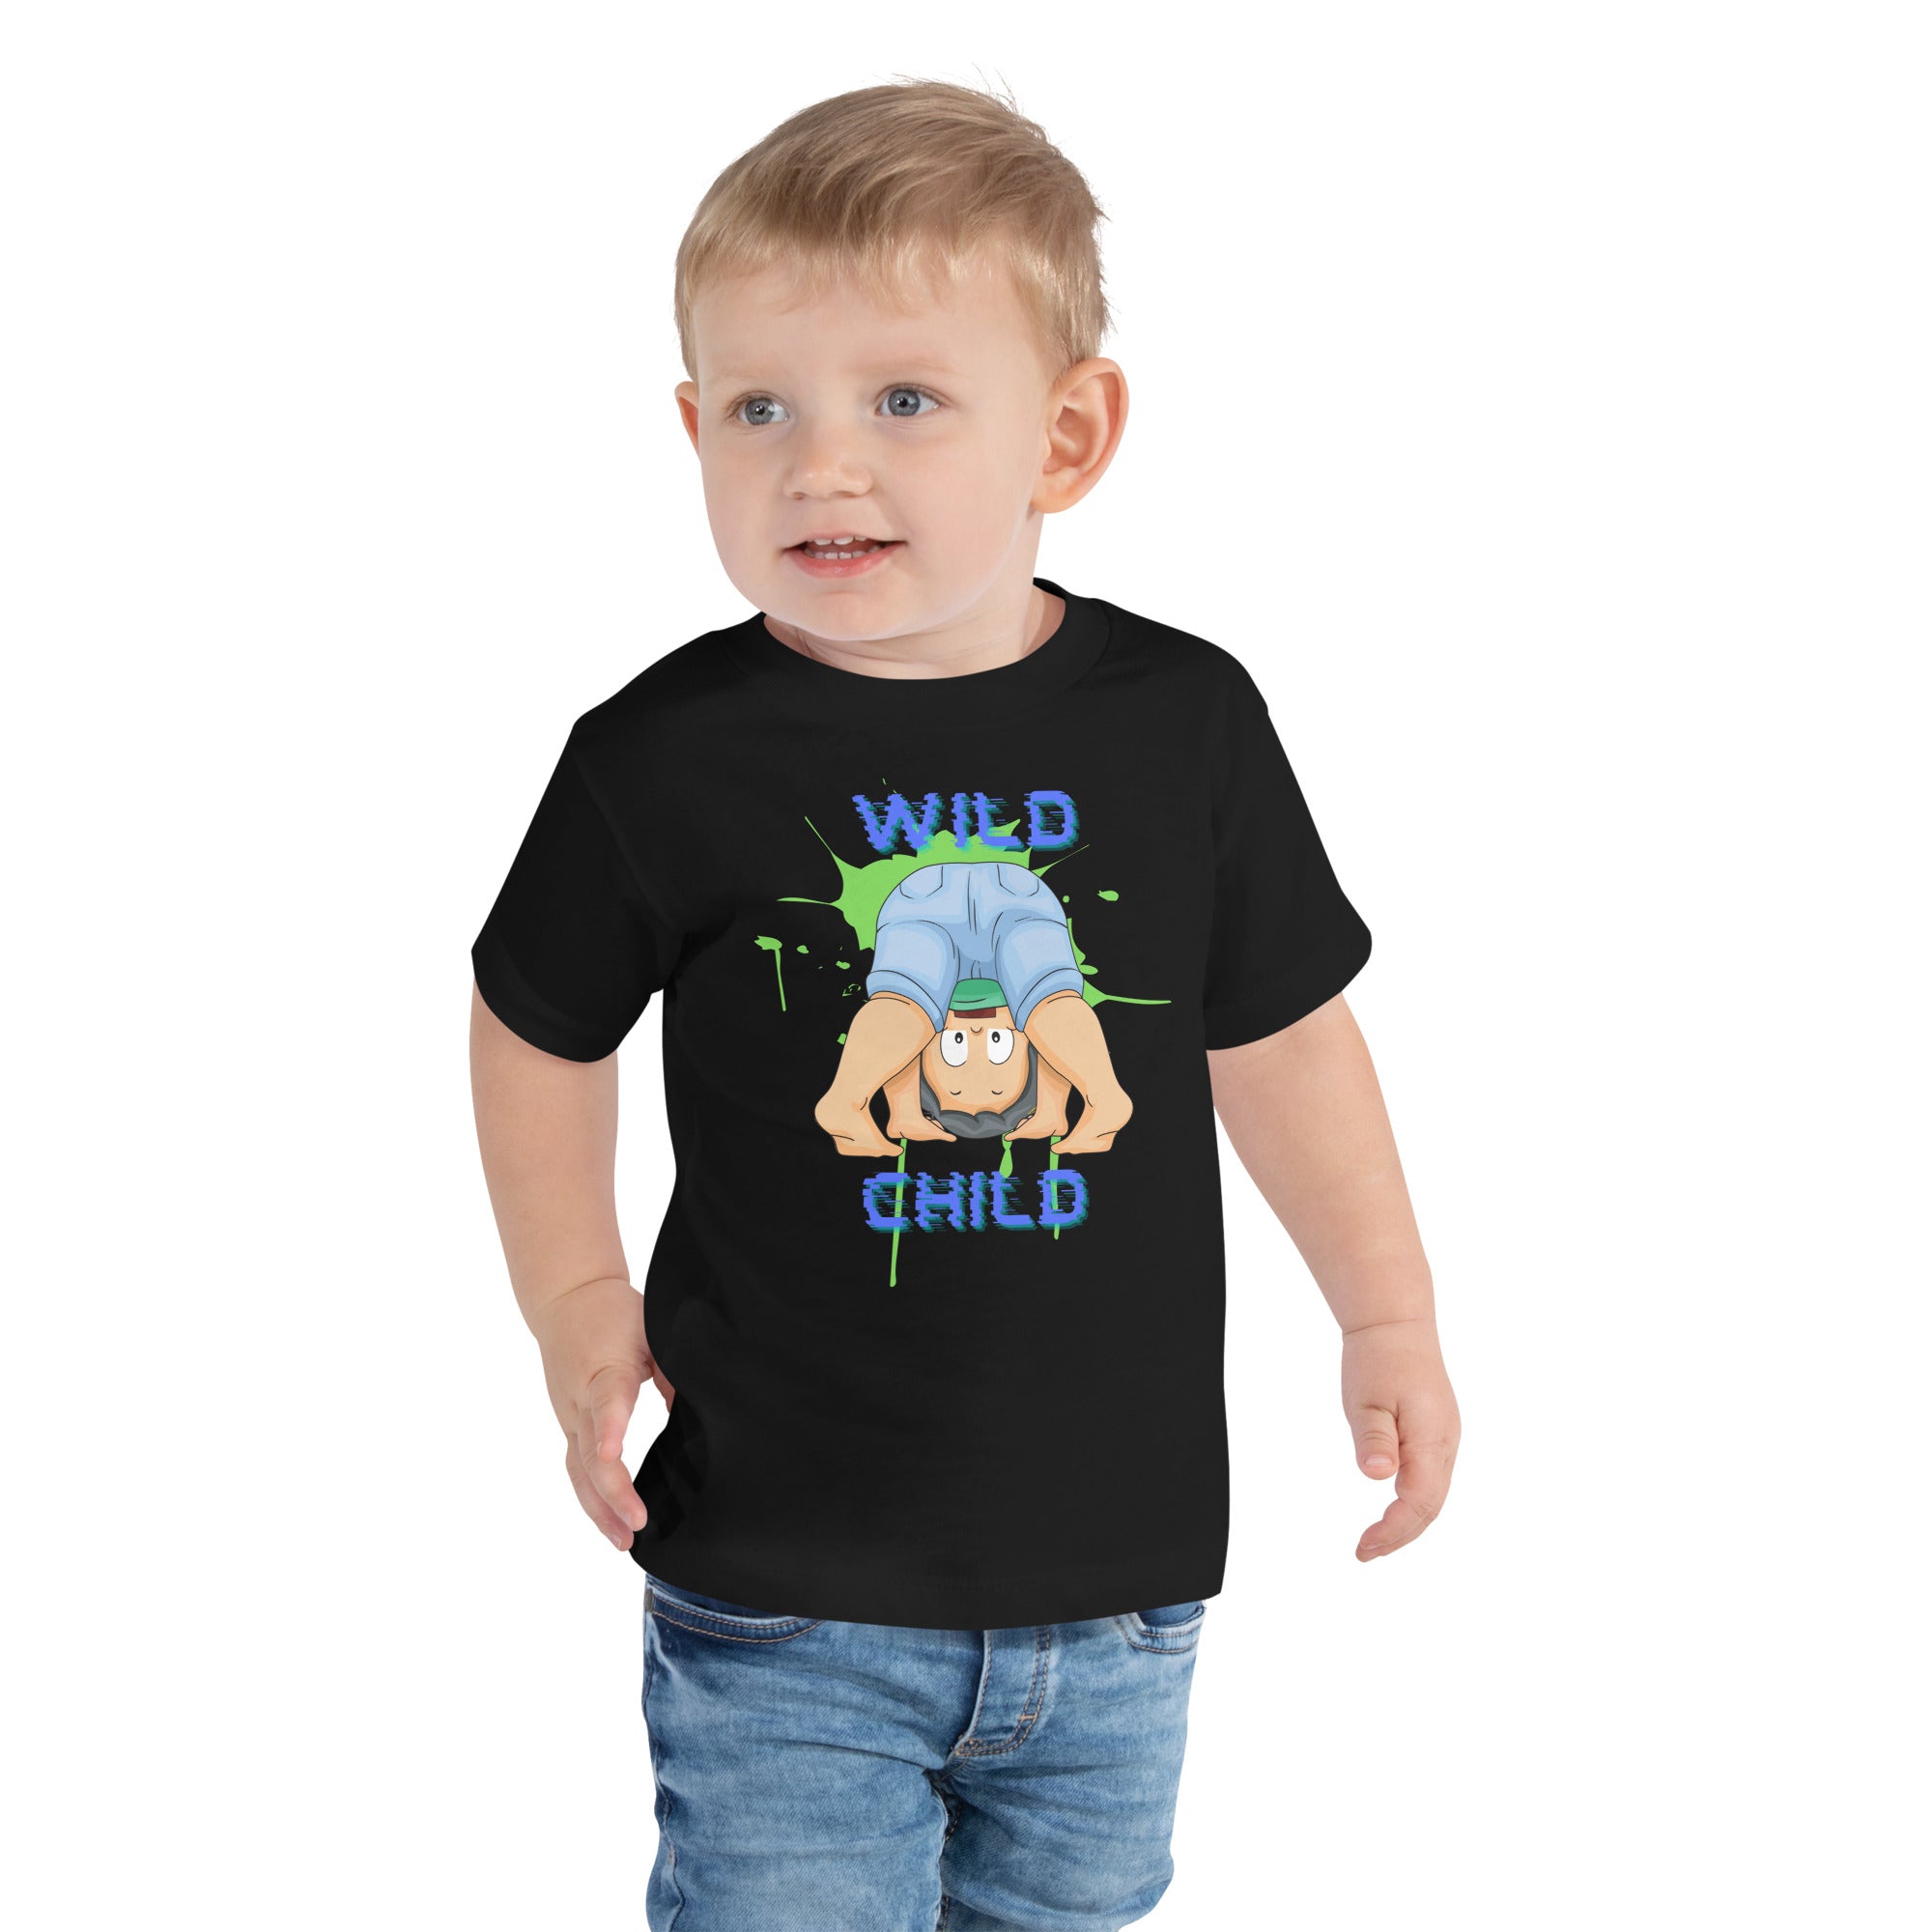 Toddler Short Sleeve Tee - Wild Child (Black)